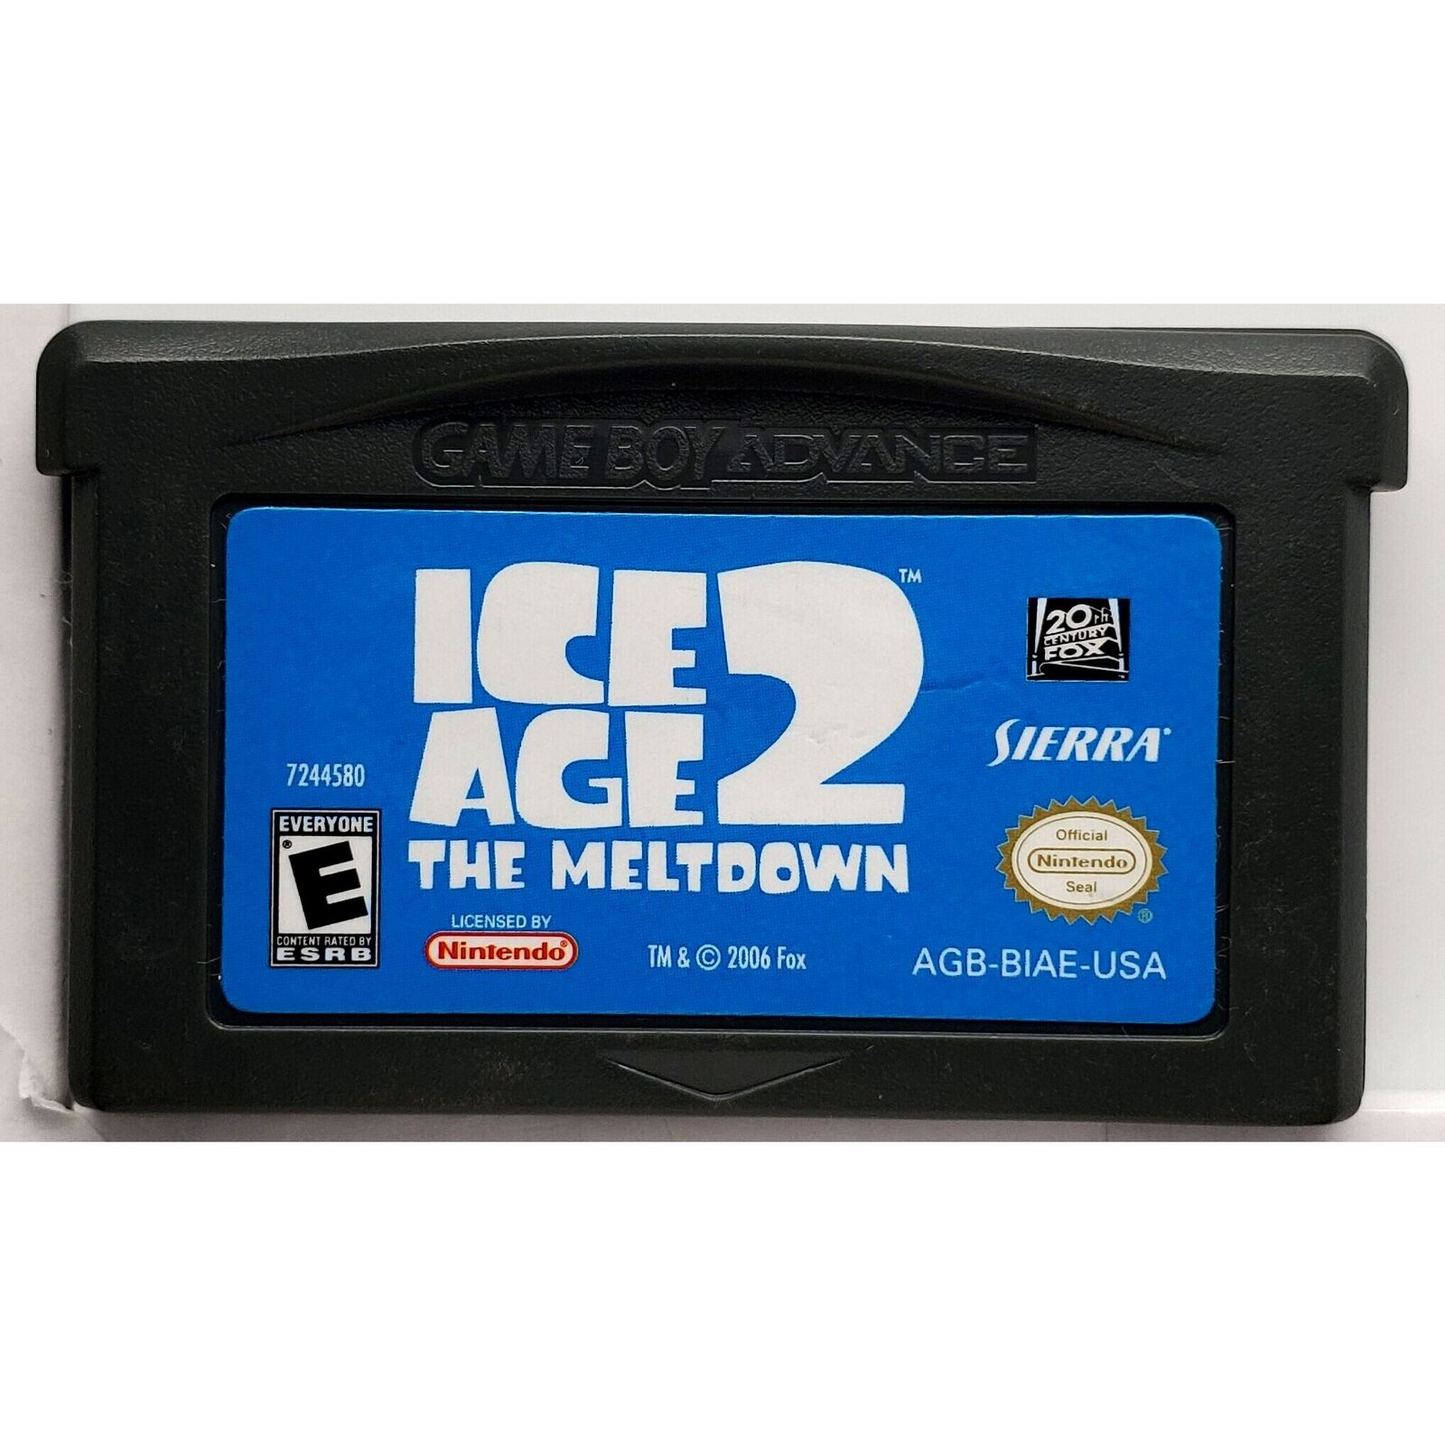 Ice Age 2 The Meltdown - Game Boy Advance